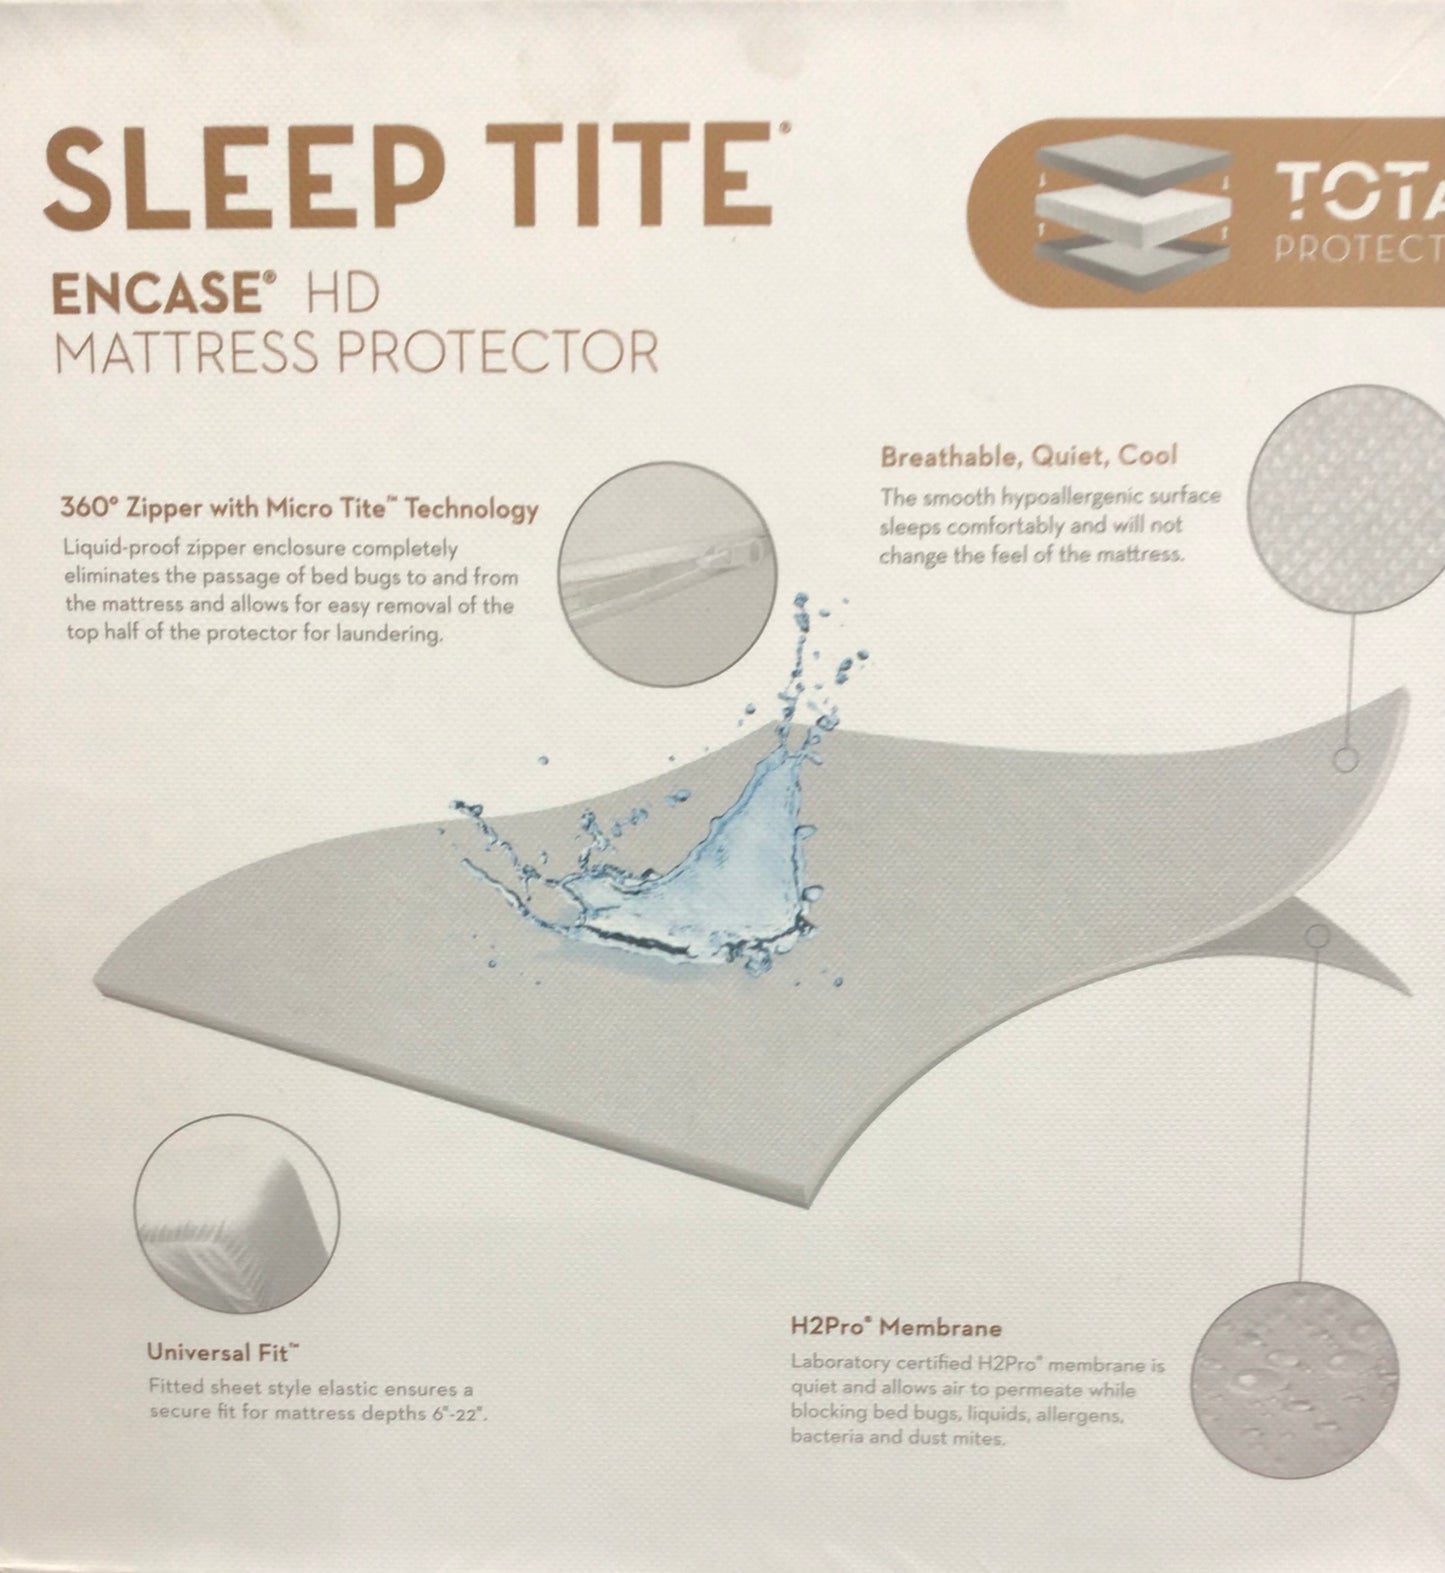 Sleep Tite Encase Mattress Protector